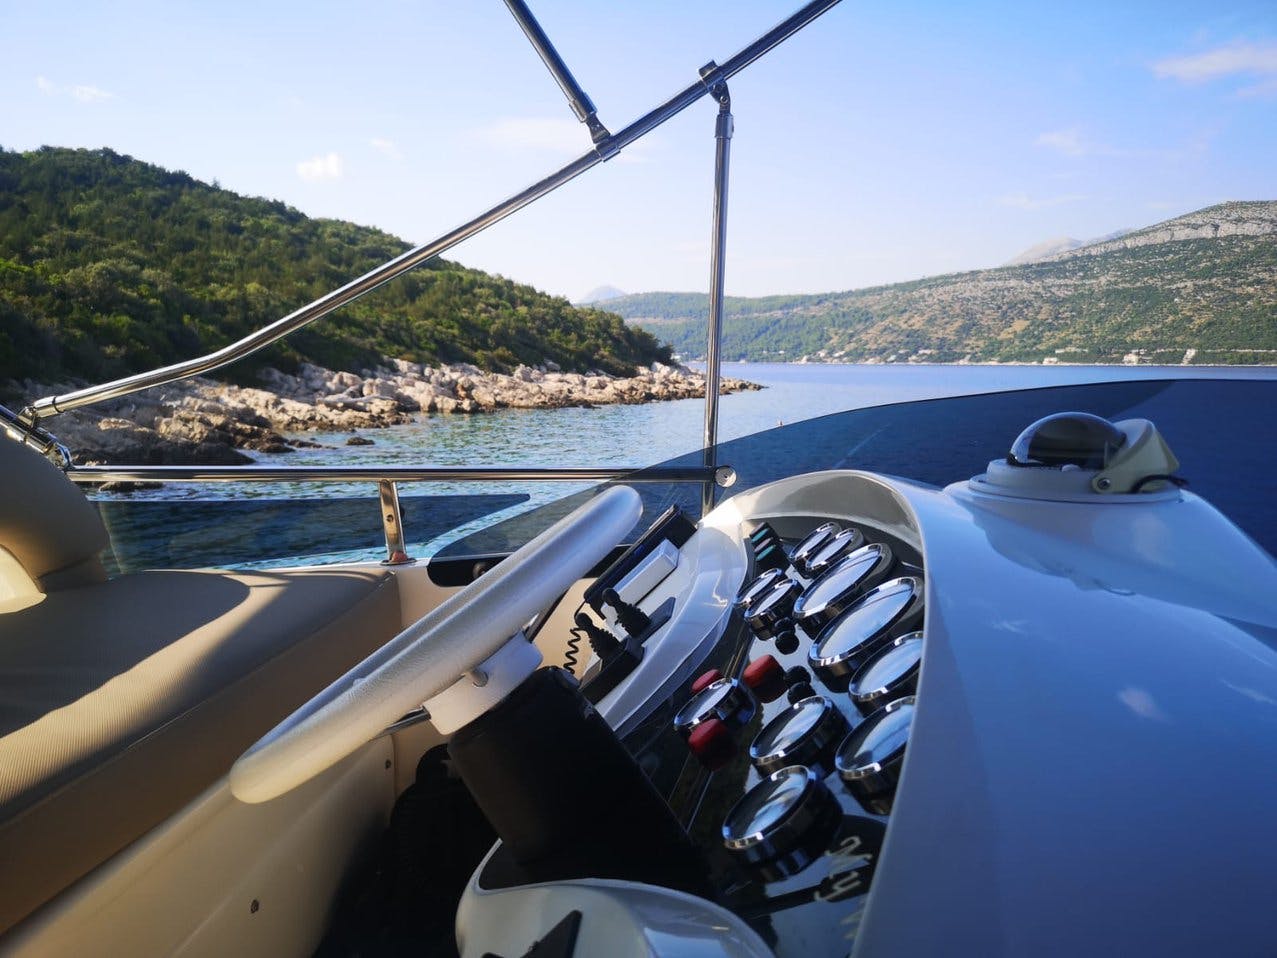 Book Fairline Phantom 40 Motor yacht for bareboat charter in Dubrovnik, Gruž, Dubrovnik region, Croatia with TripYacht!, picture 8